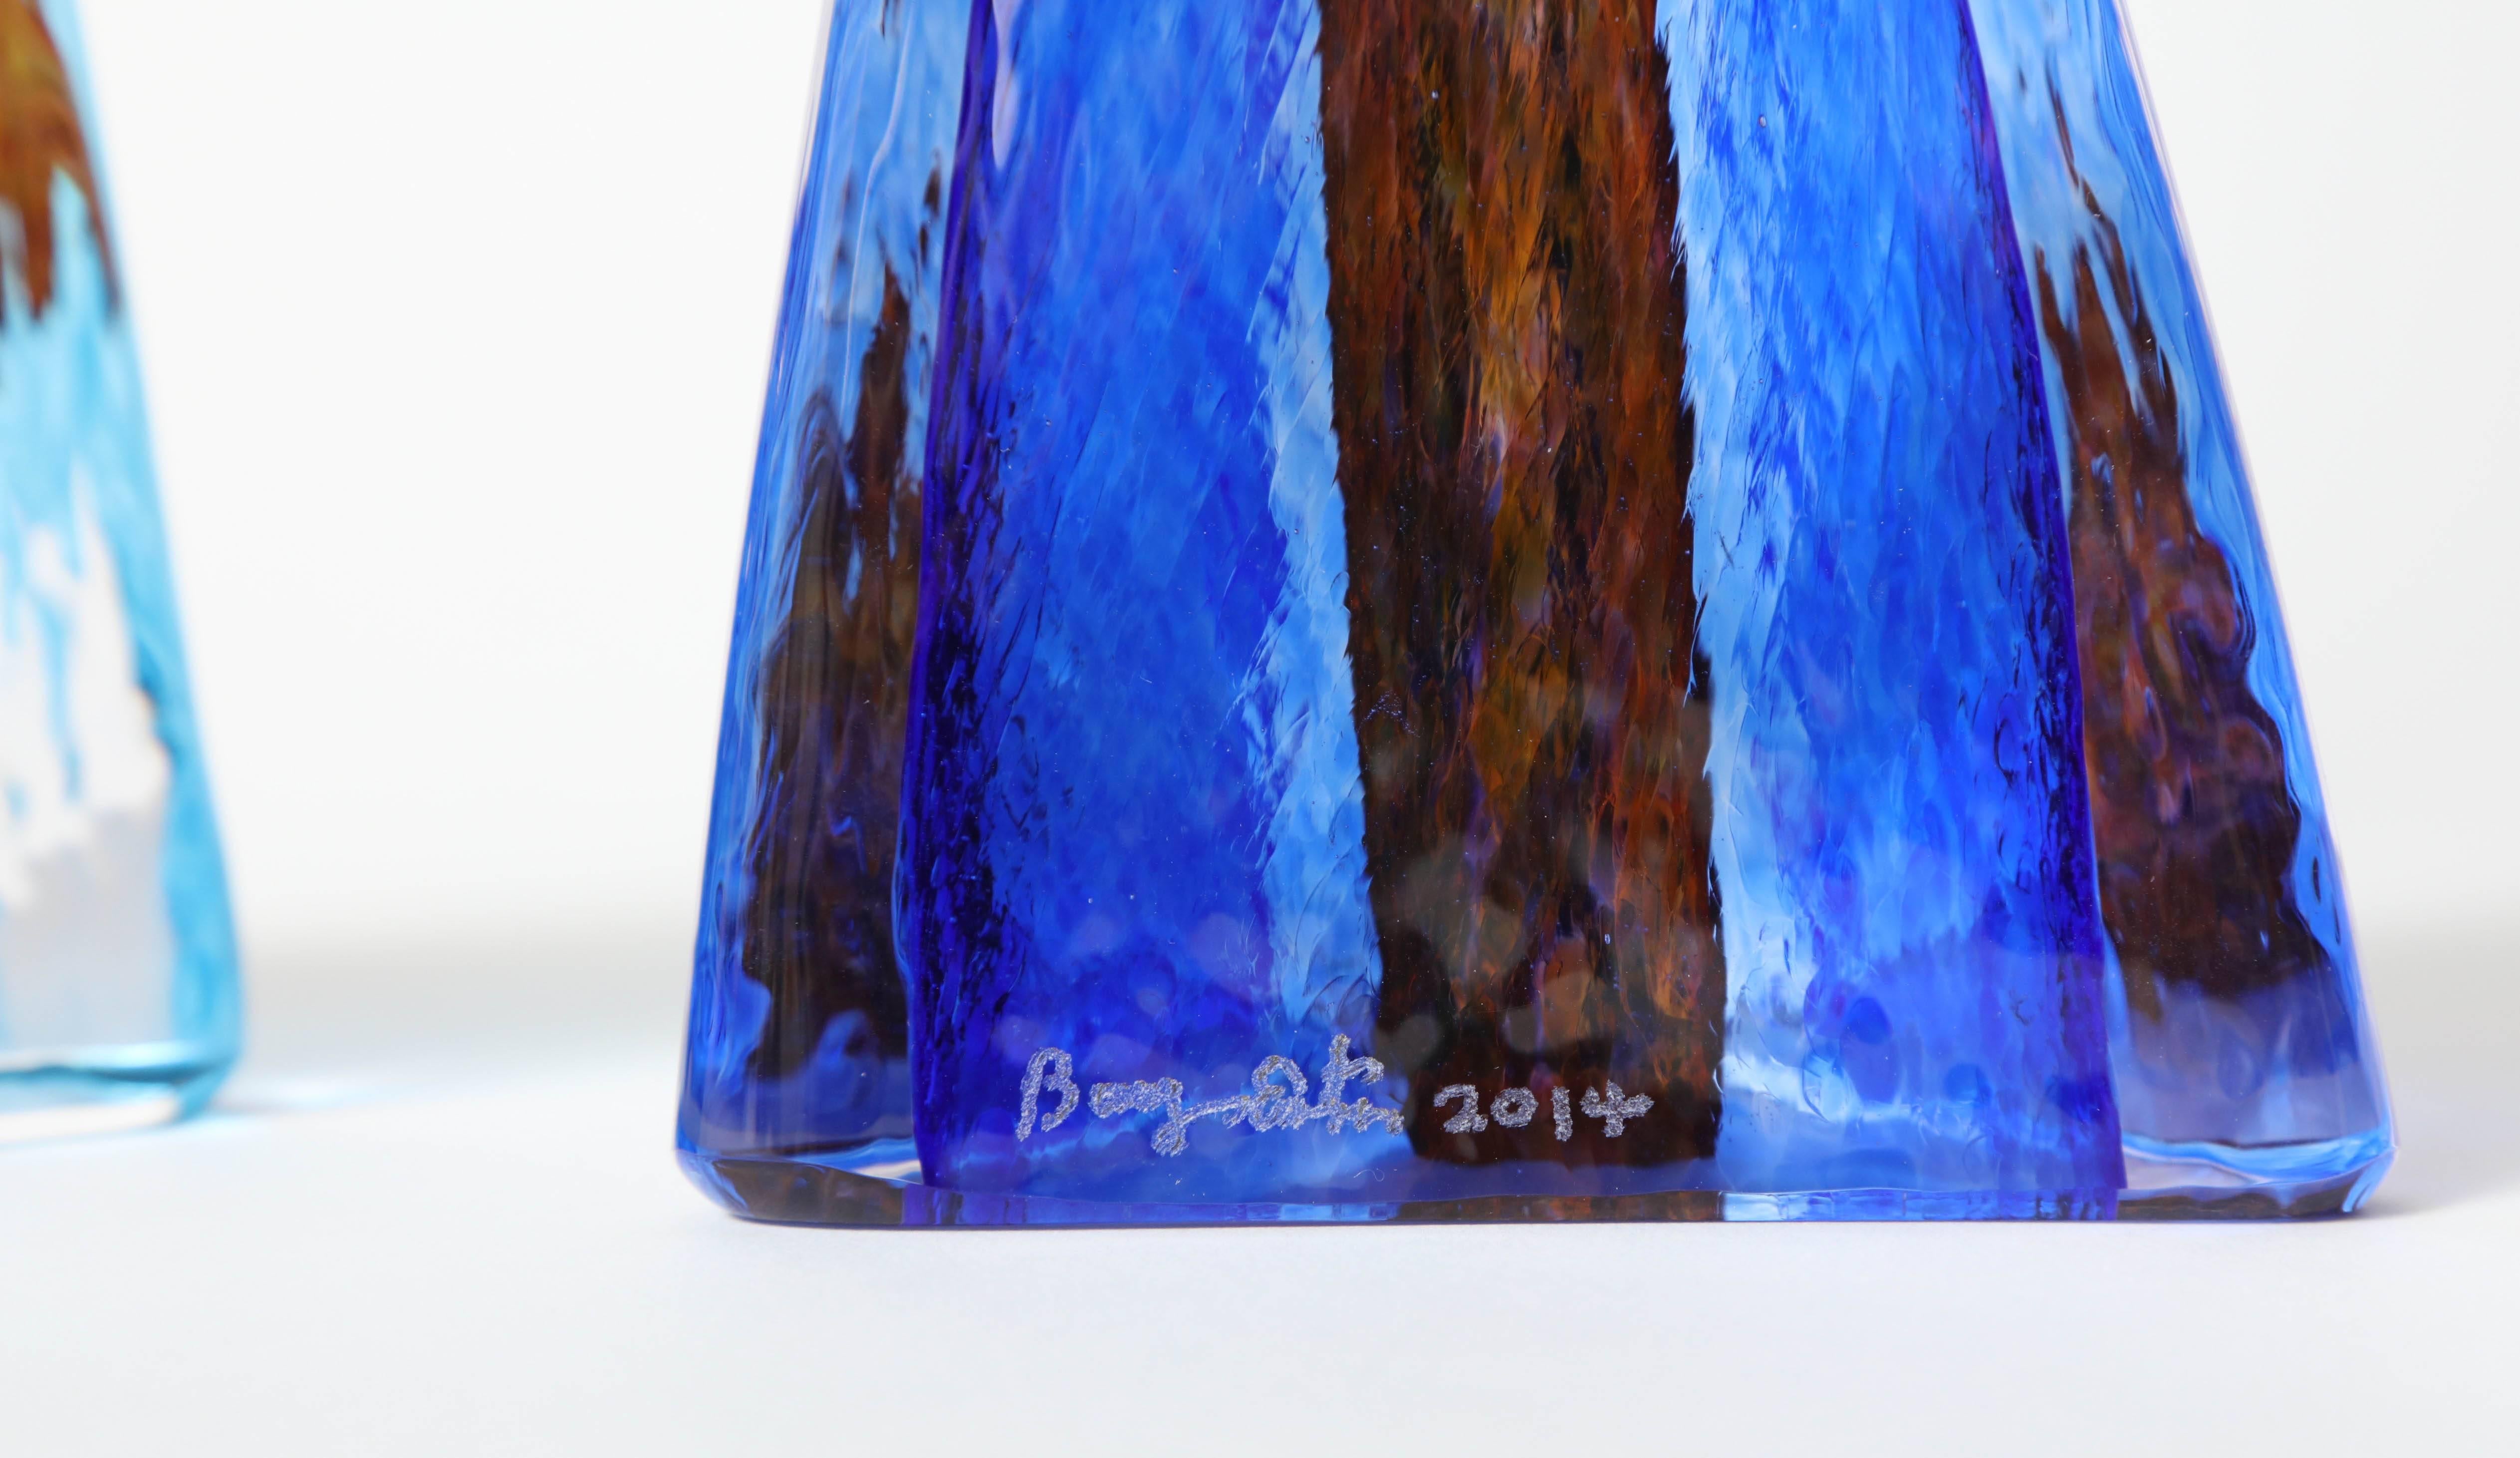 Barry Entner Triangle Solids Glass Sculpture, 2014 2